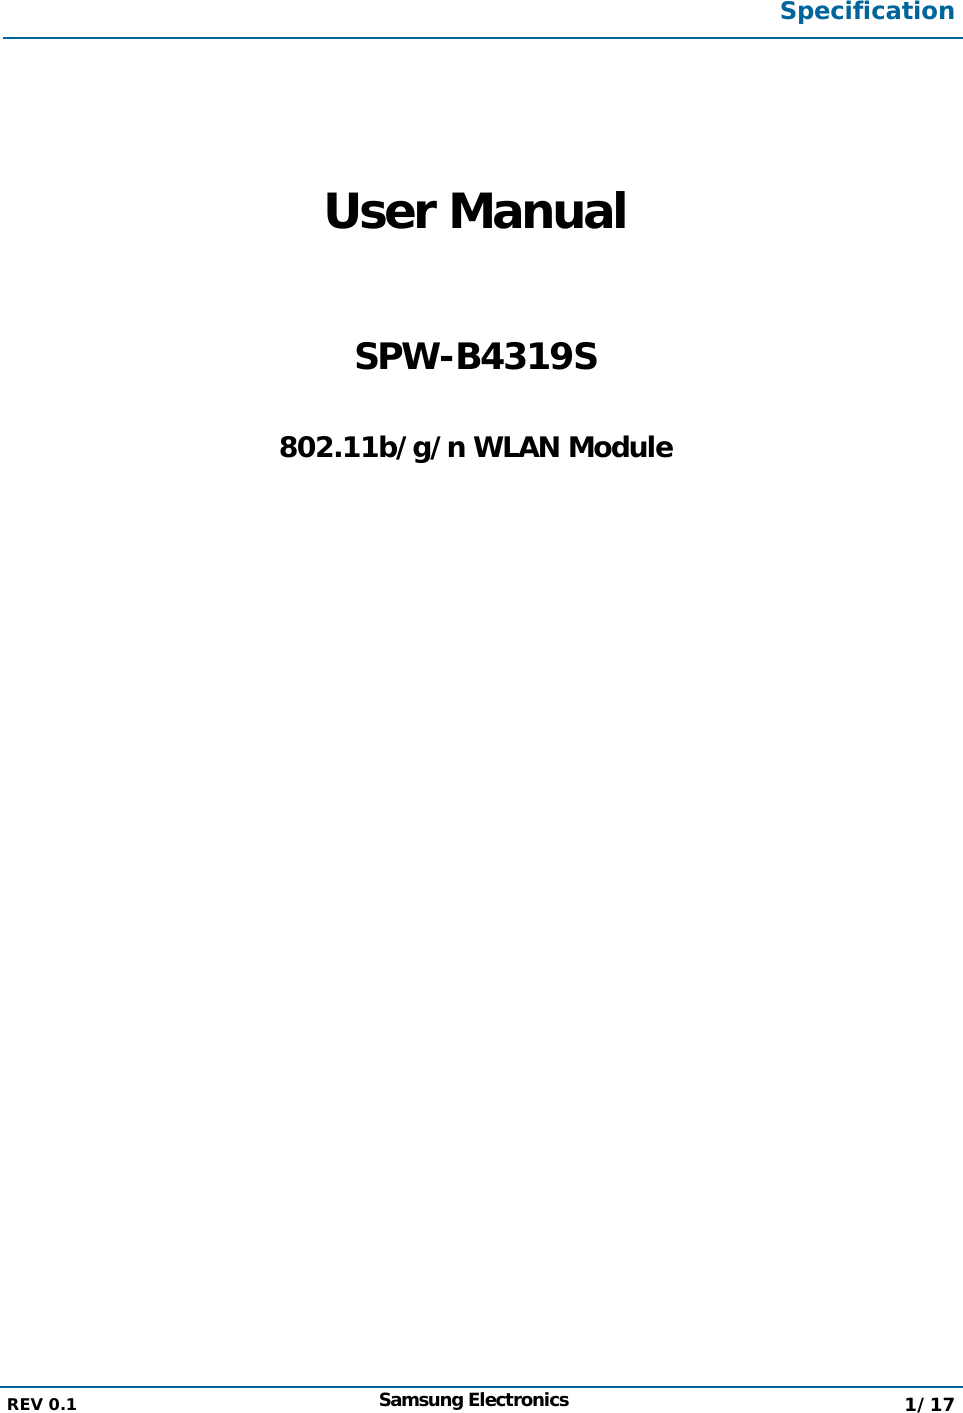  Specification  REV 0.1  Samsung Electronics  1/17    User Manual  SPW-B4319S  802.11b/g/n WLAN Module         